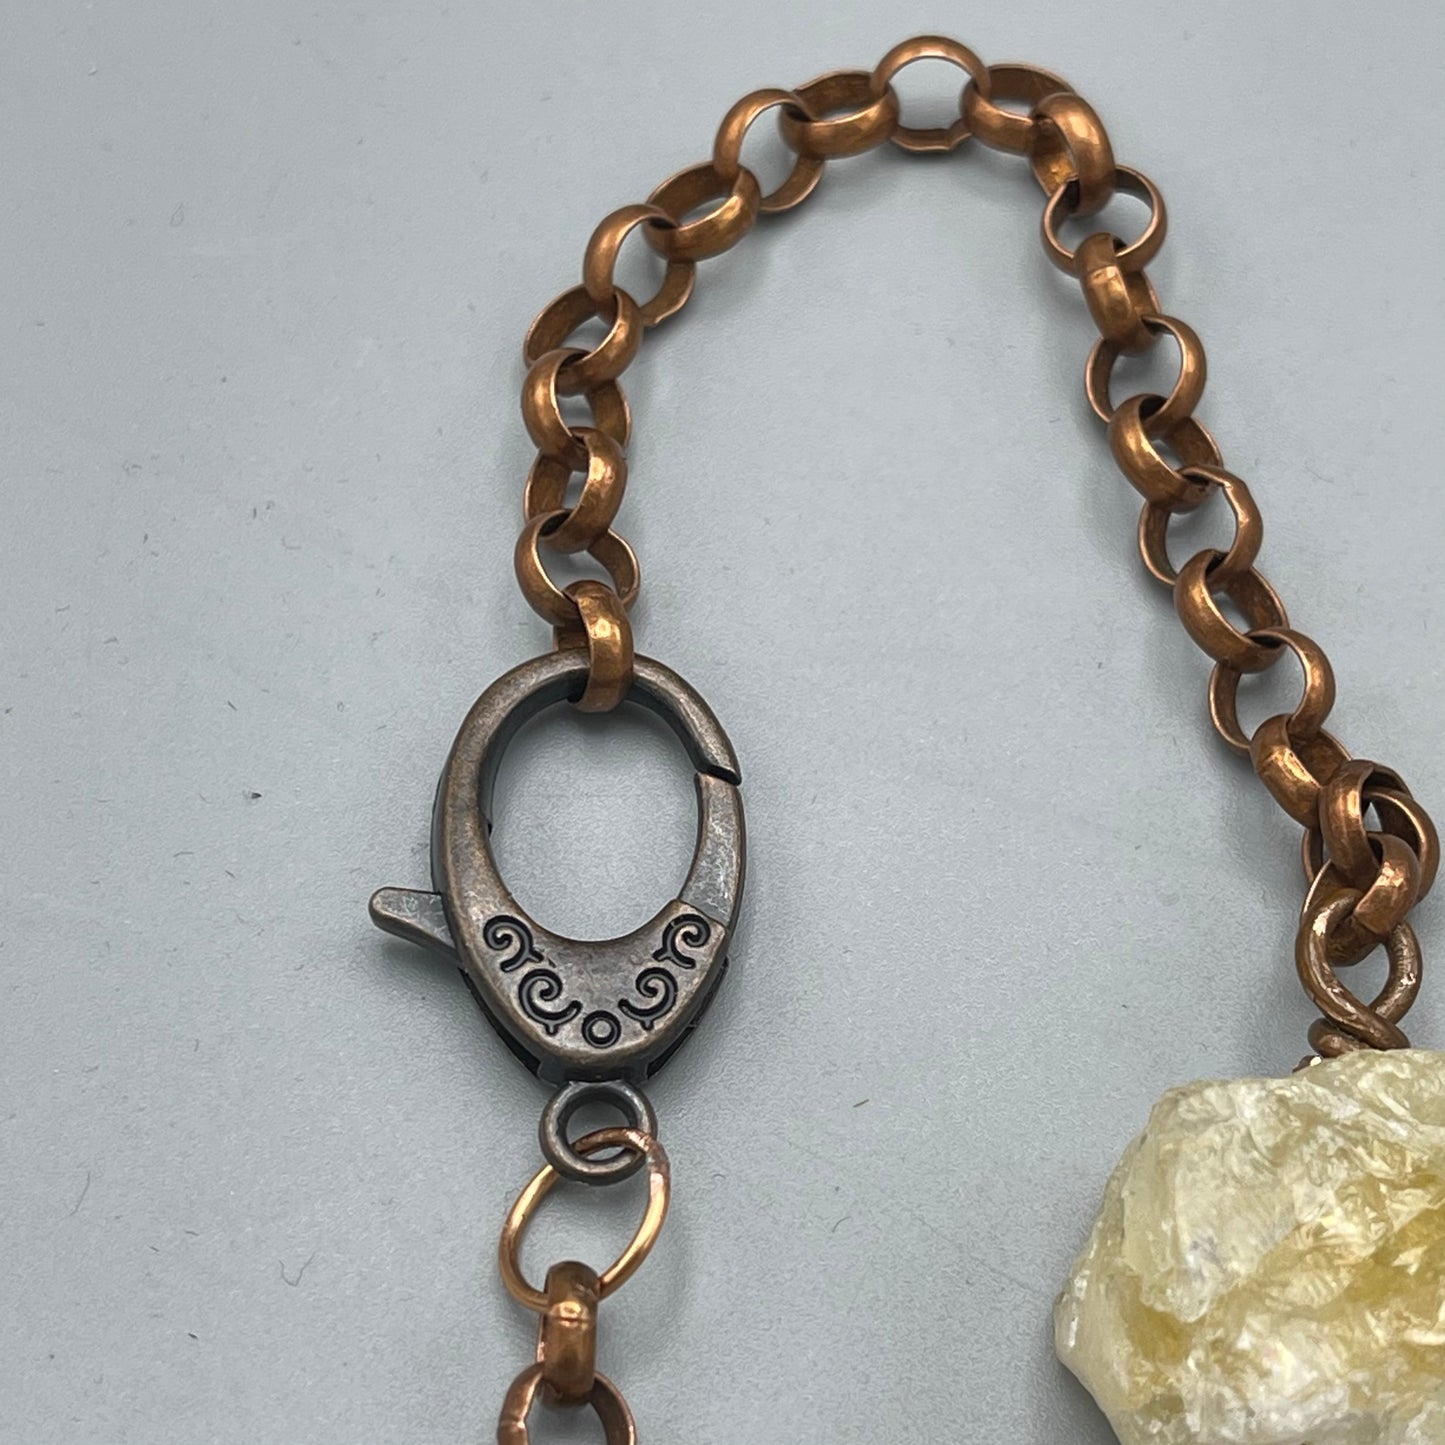 Raw Citrine gemstone Bracelet